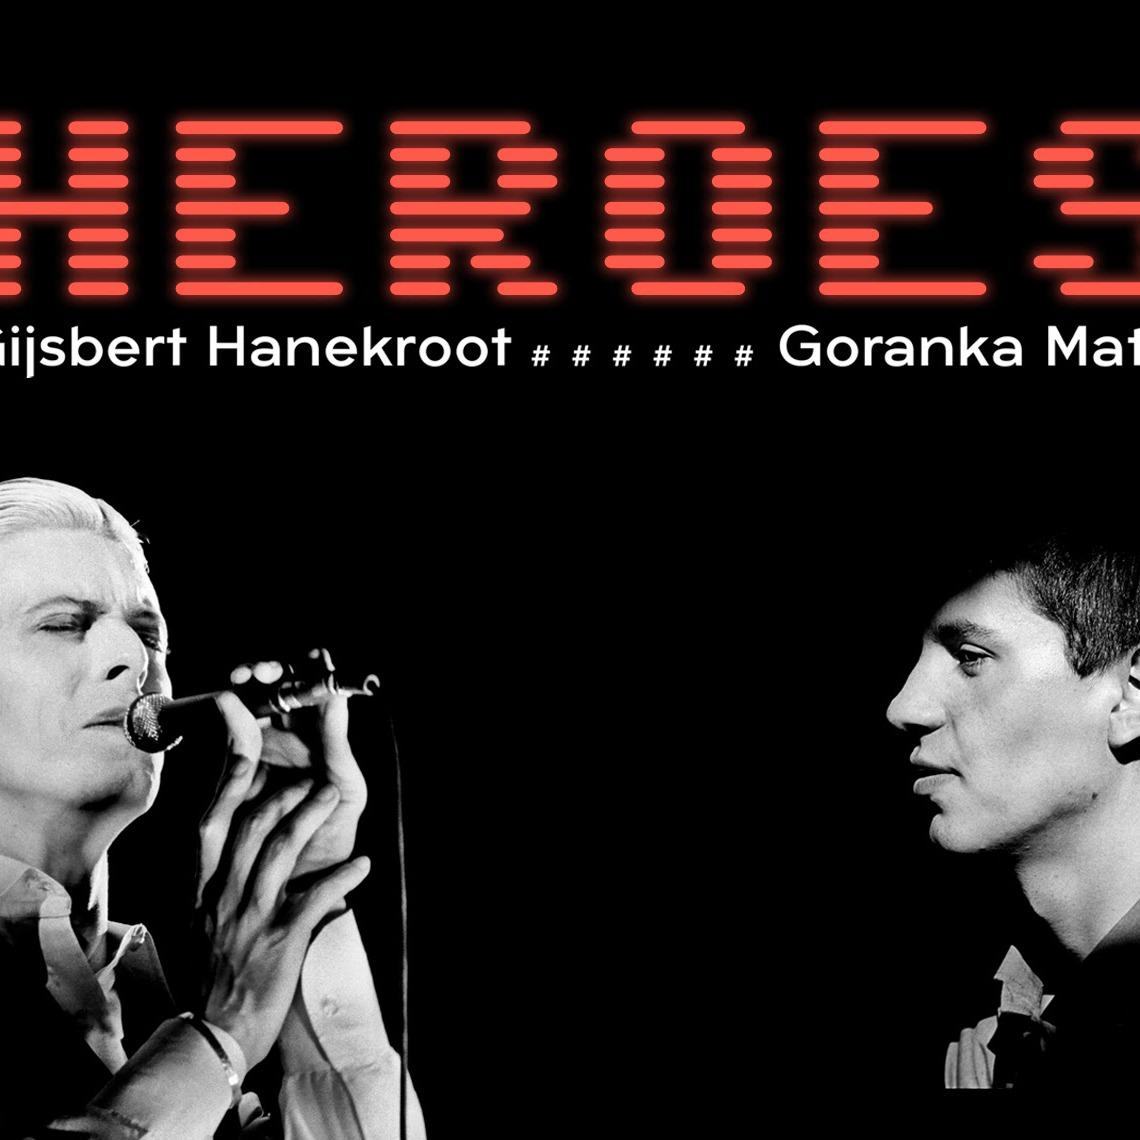 Slika za HEROES: Hajsbert Hanekrot i Goranka Matić